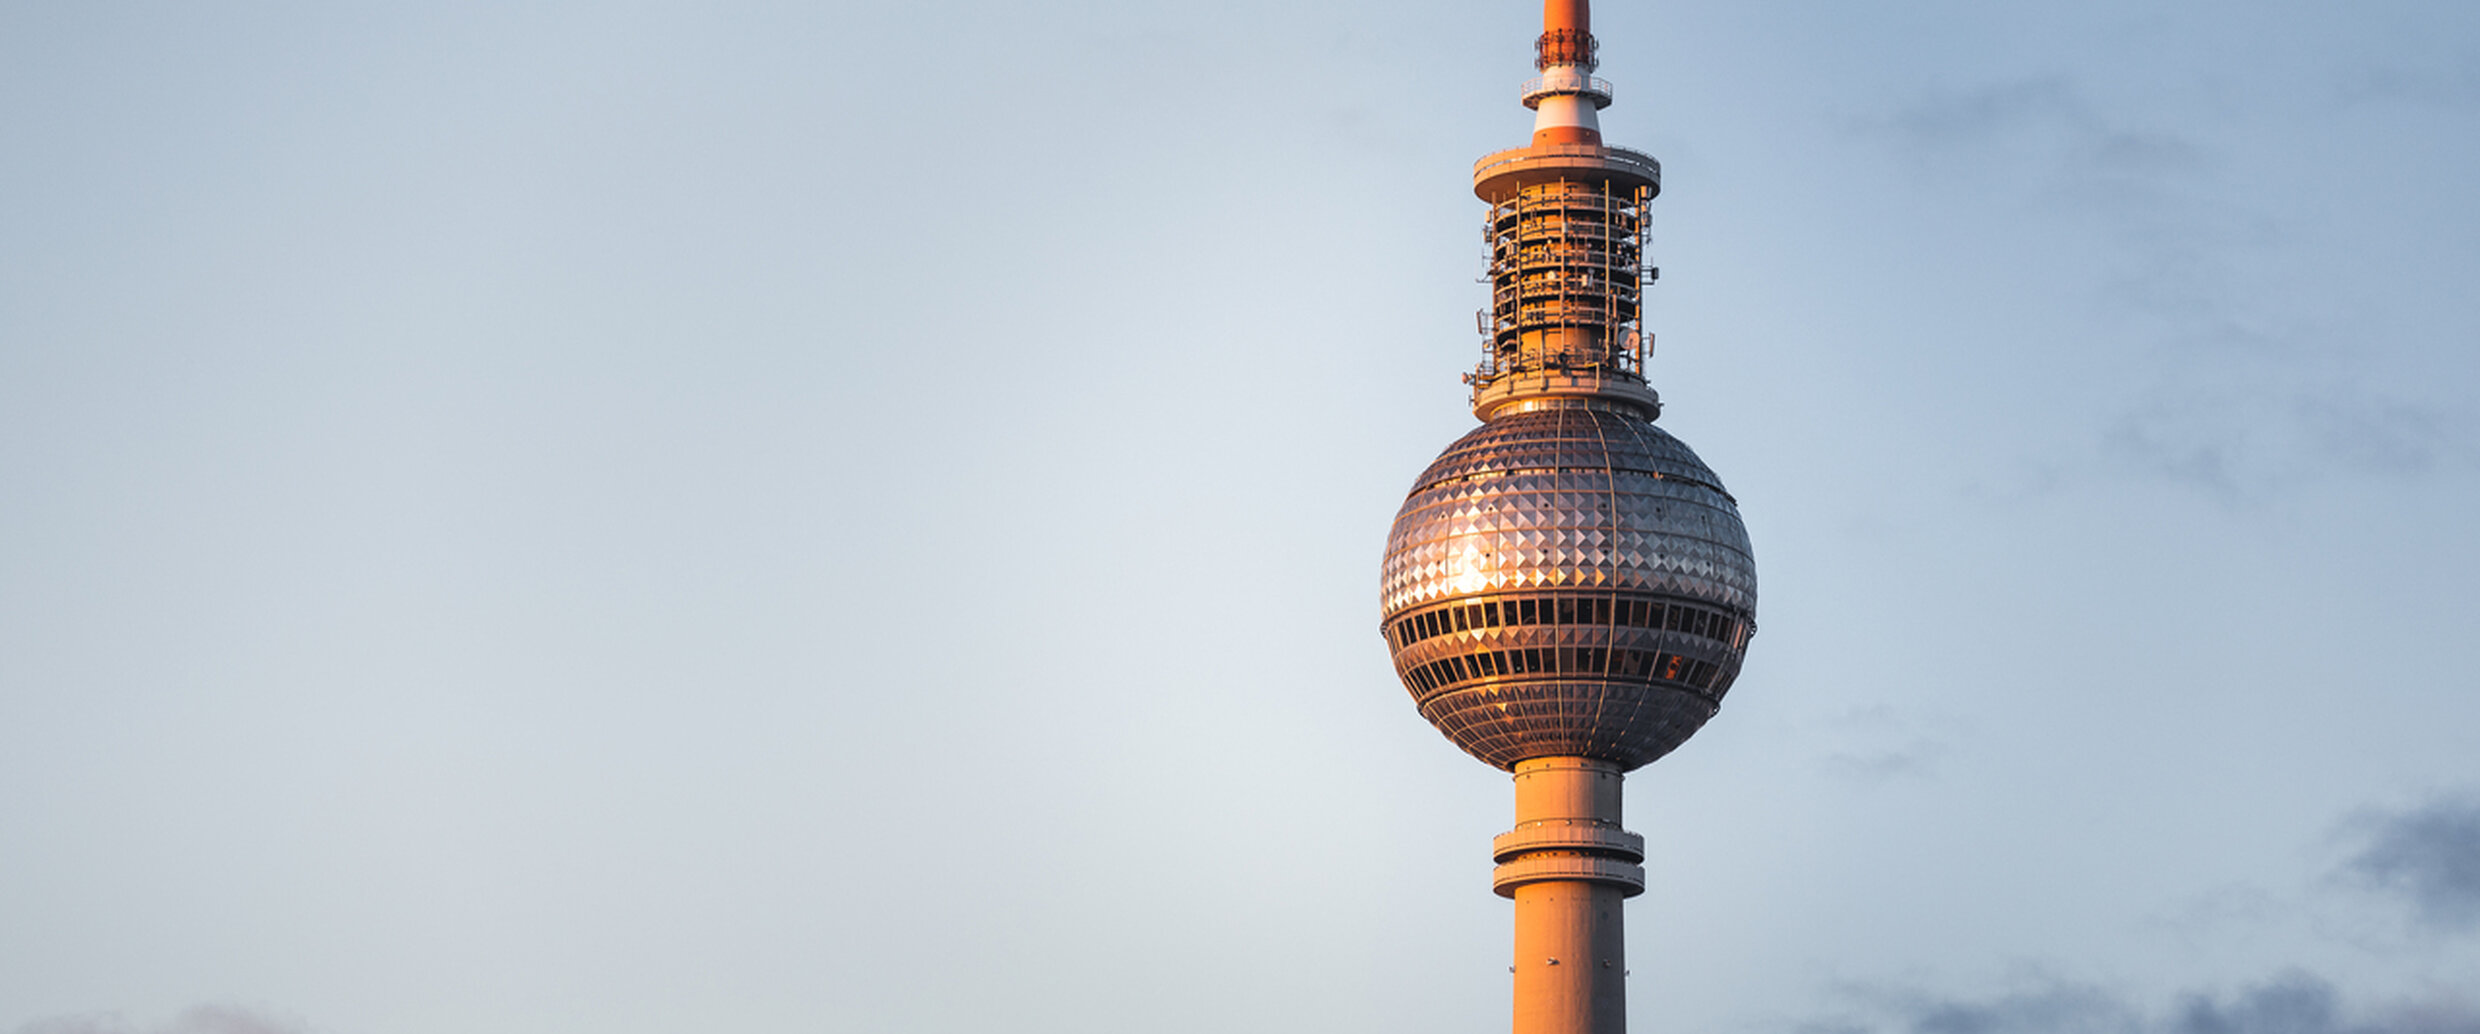 Berlin's Top Attractions places to visit in | visitBerlin.de